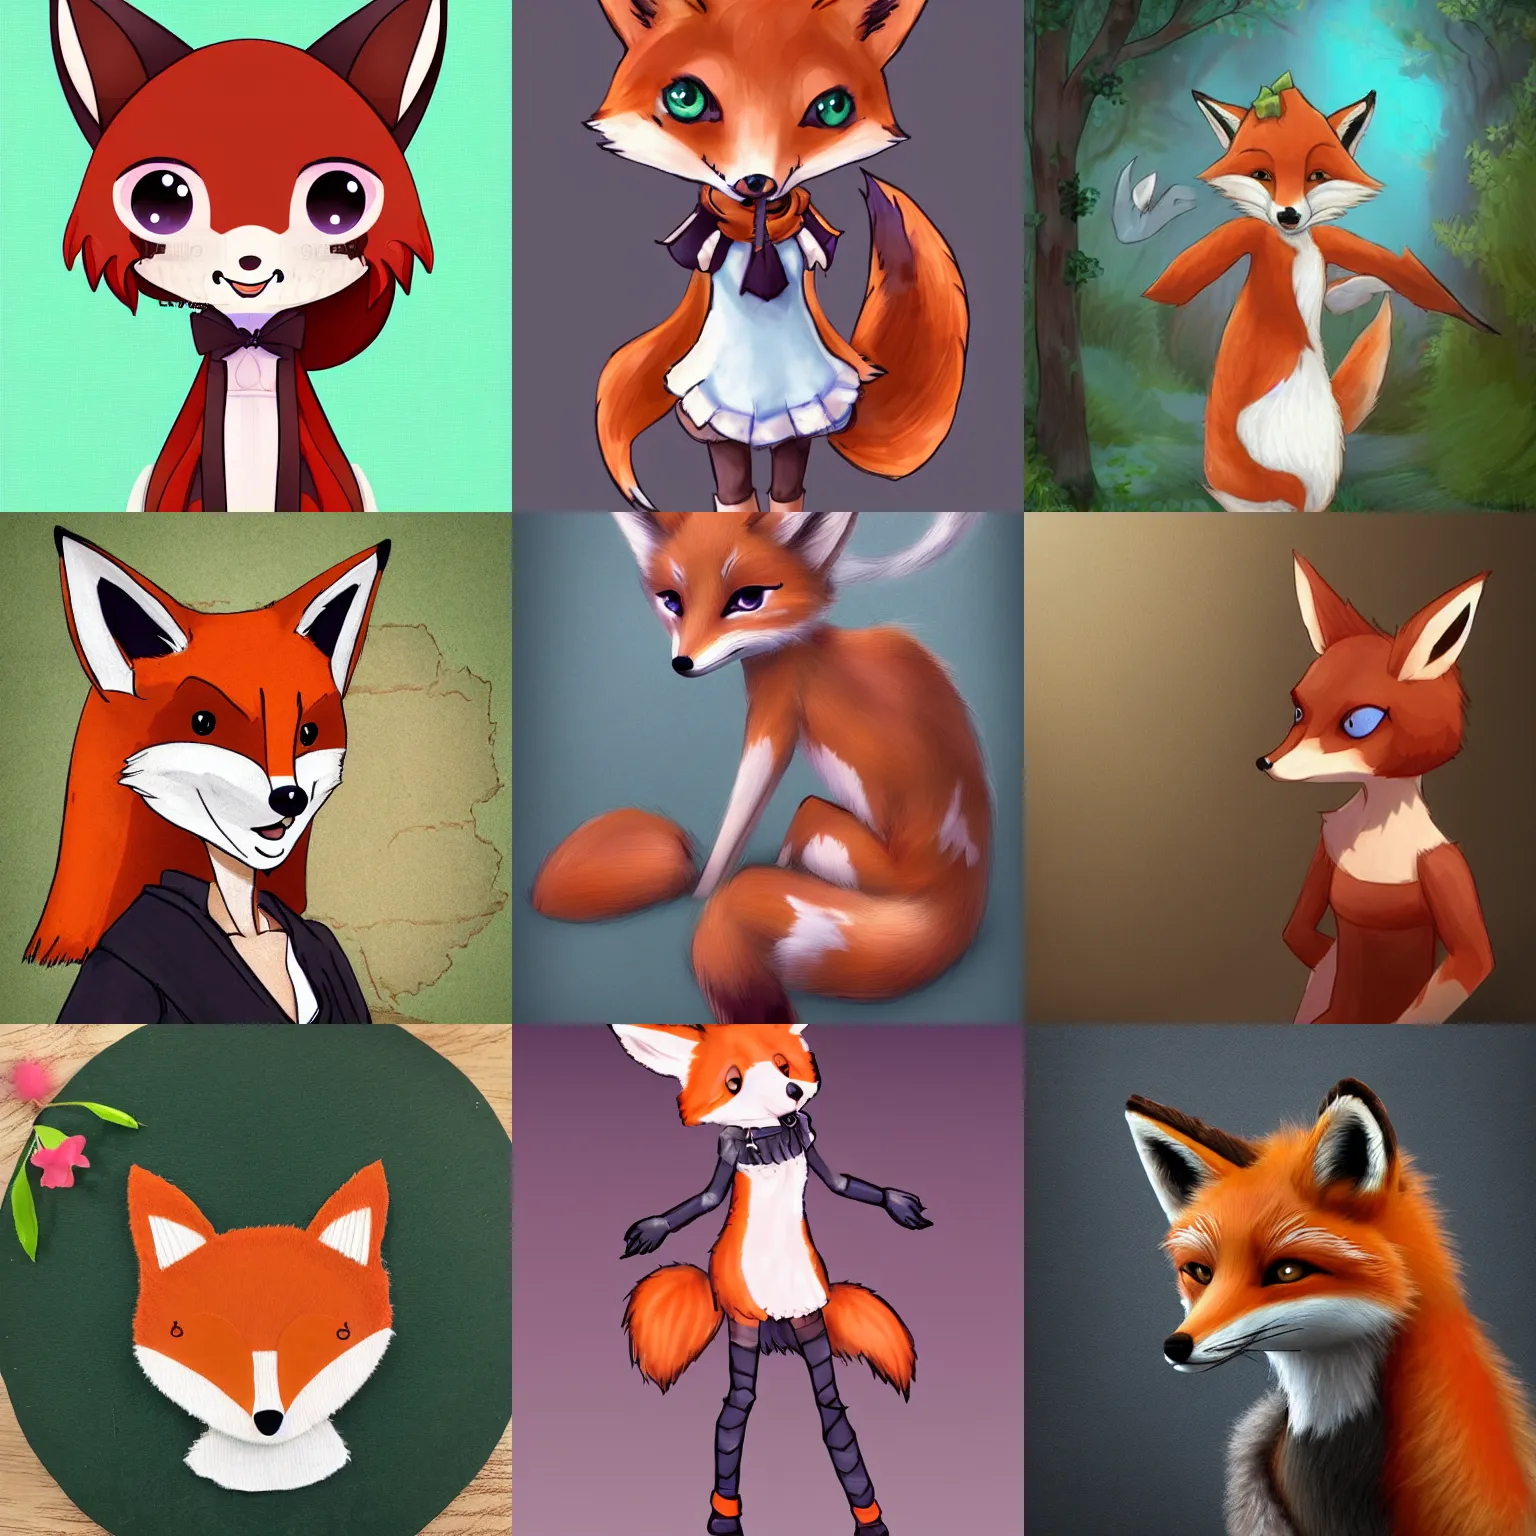 Prompt: a cute fox girl